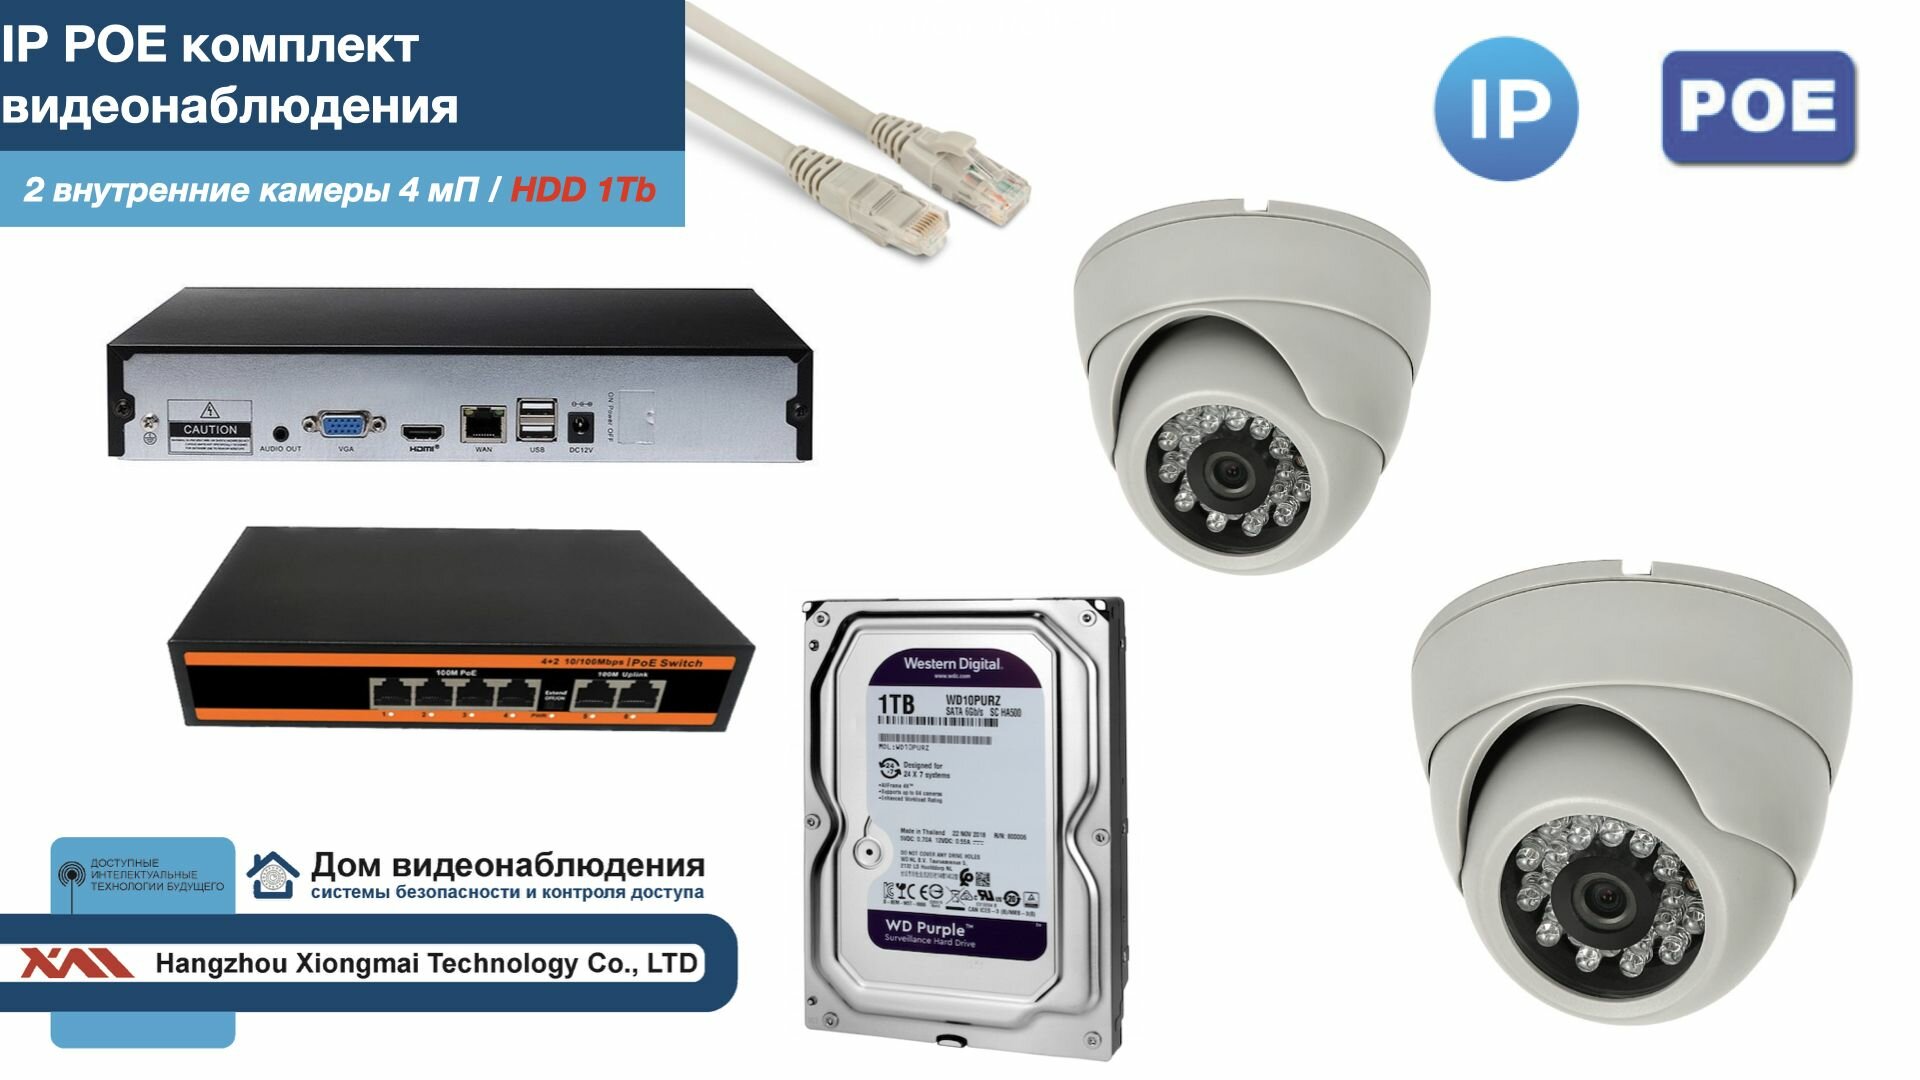 Полный IP POE комплект видеонаблюдения на 2 камеры (KIT2IPPOE300W4MP-HDD1Tb)